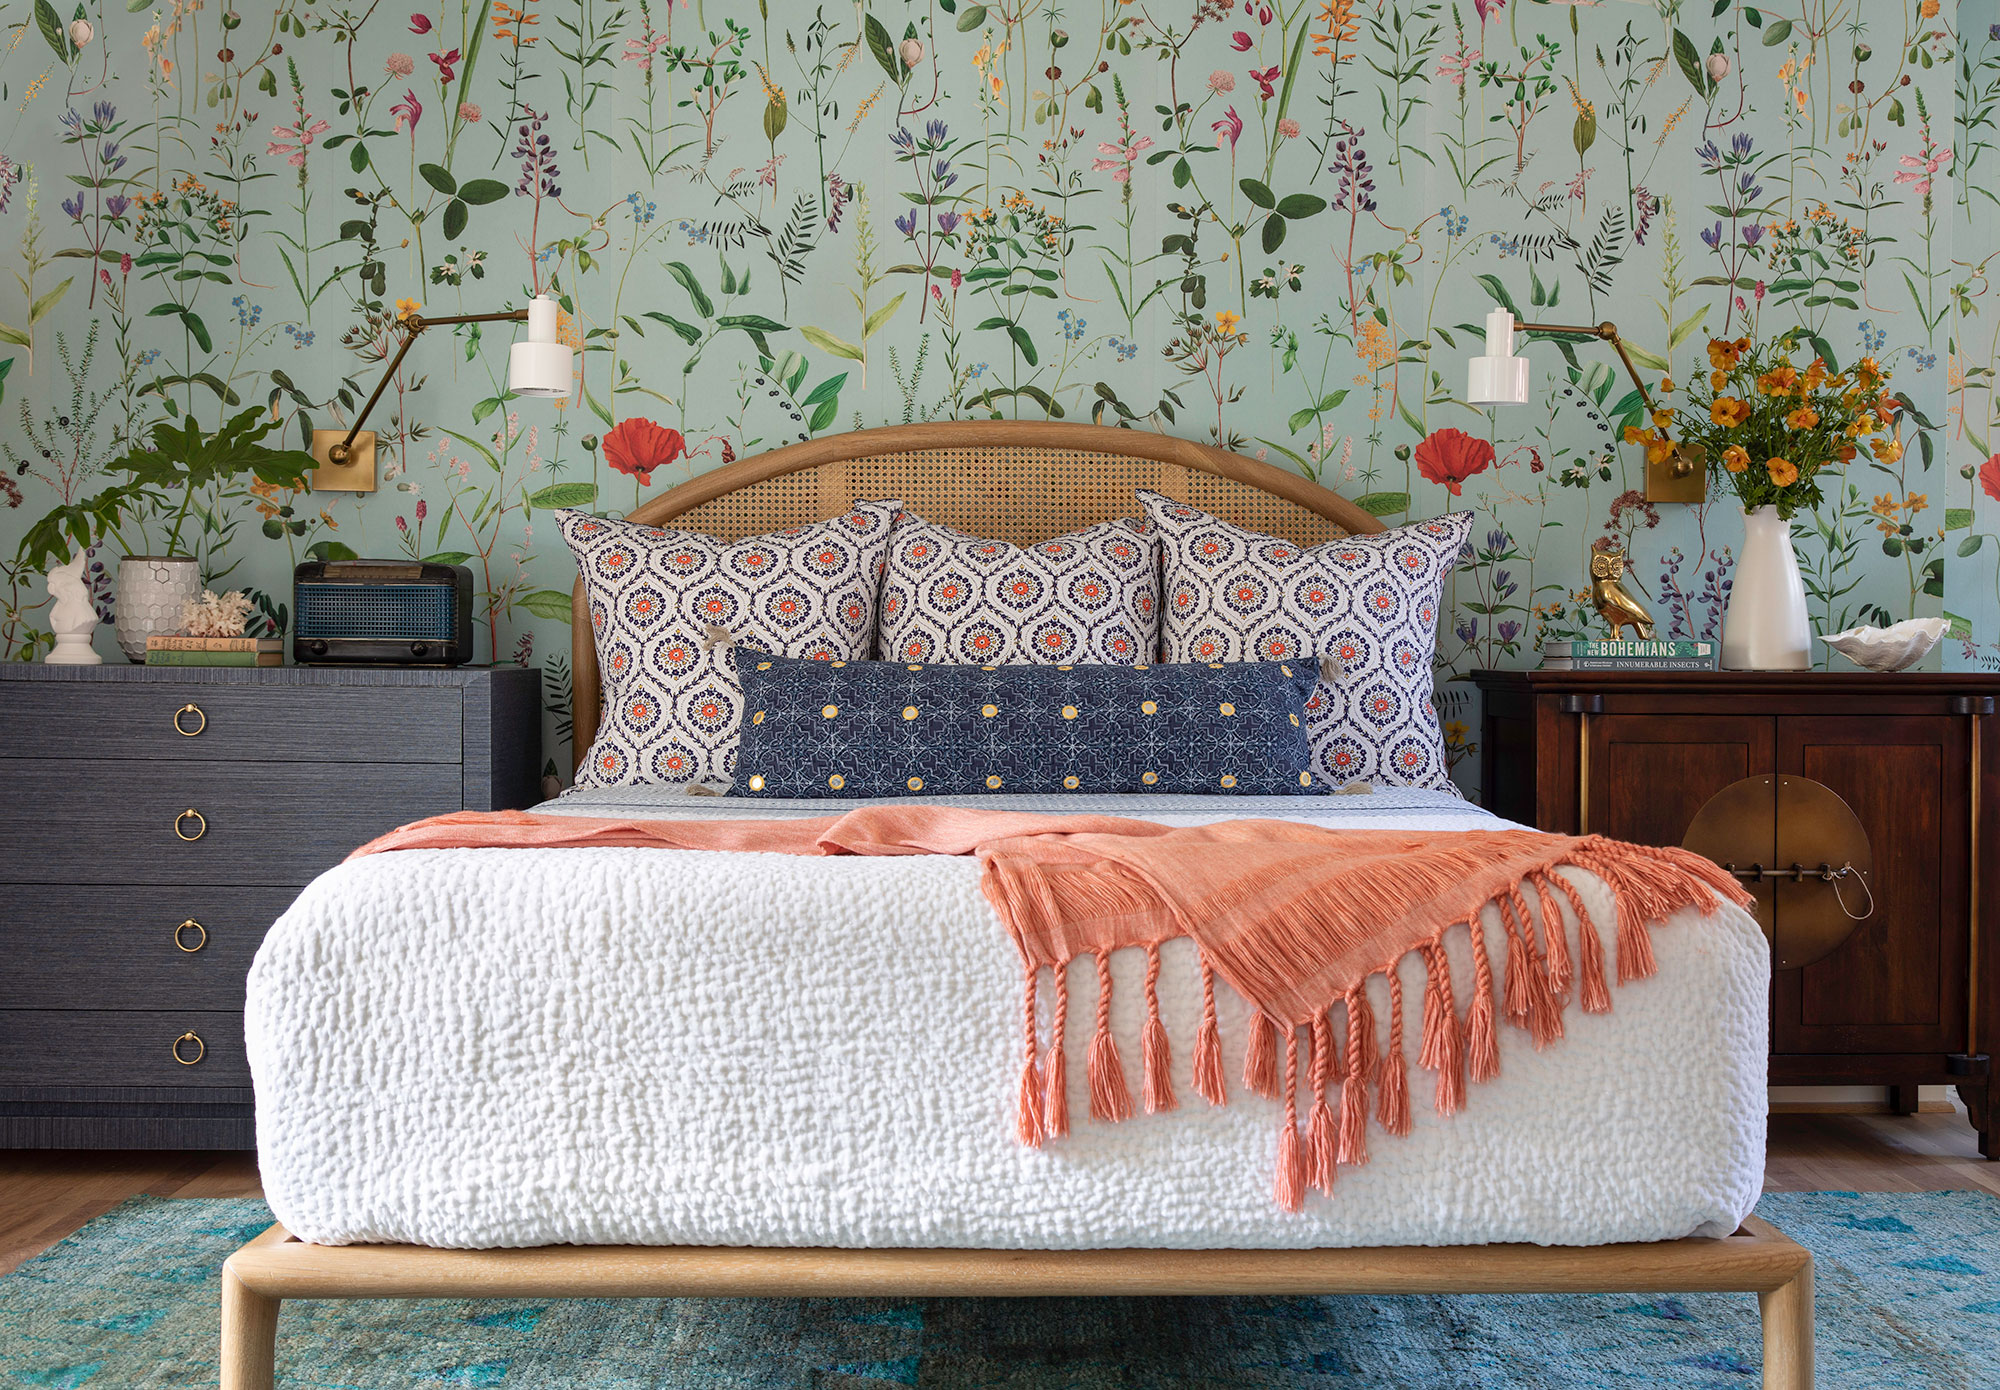 Bed with Floral Wallpaper | Best Imaginative Bedroom Design Ideas